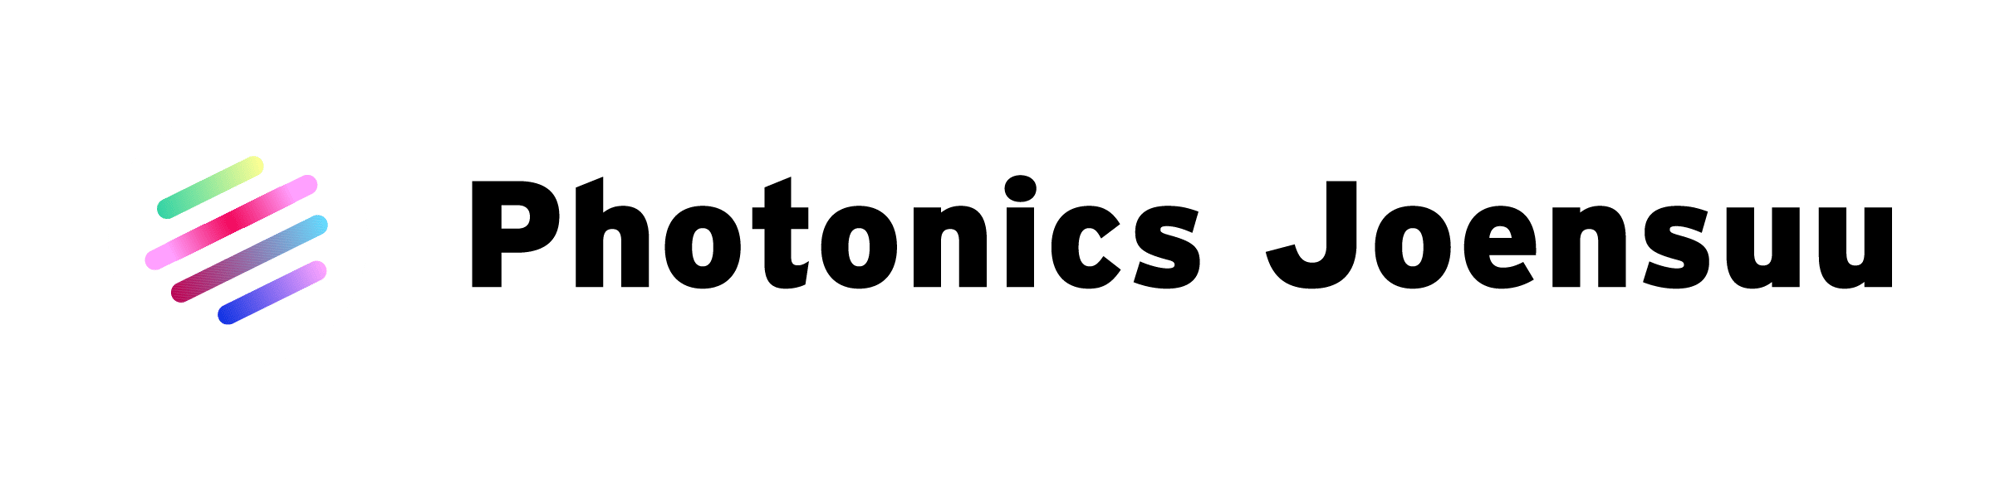 Photonics_Joensuu_logo_